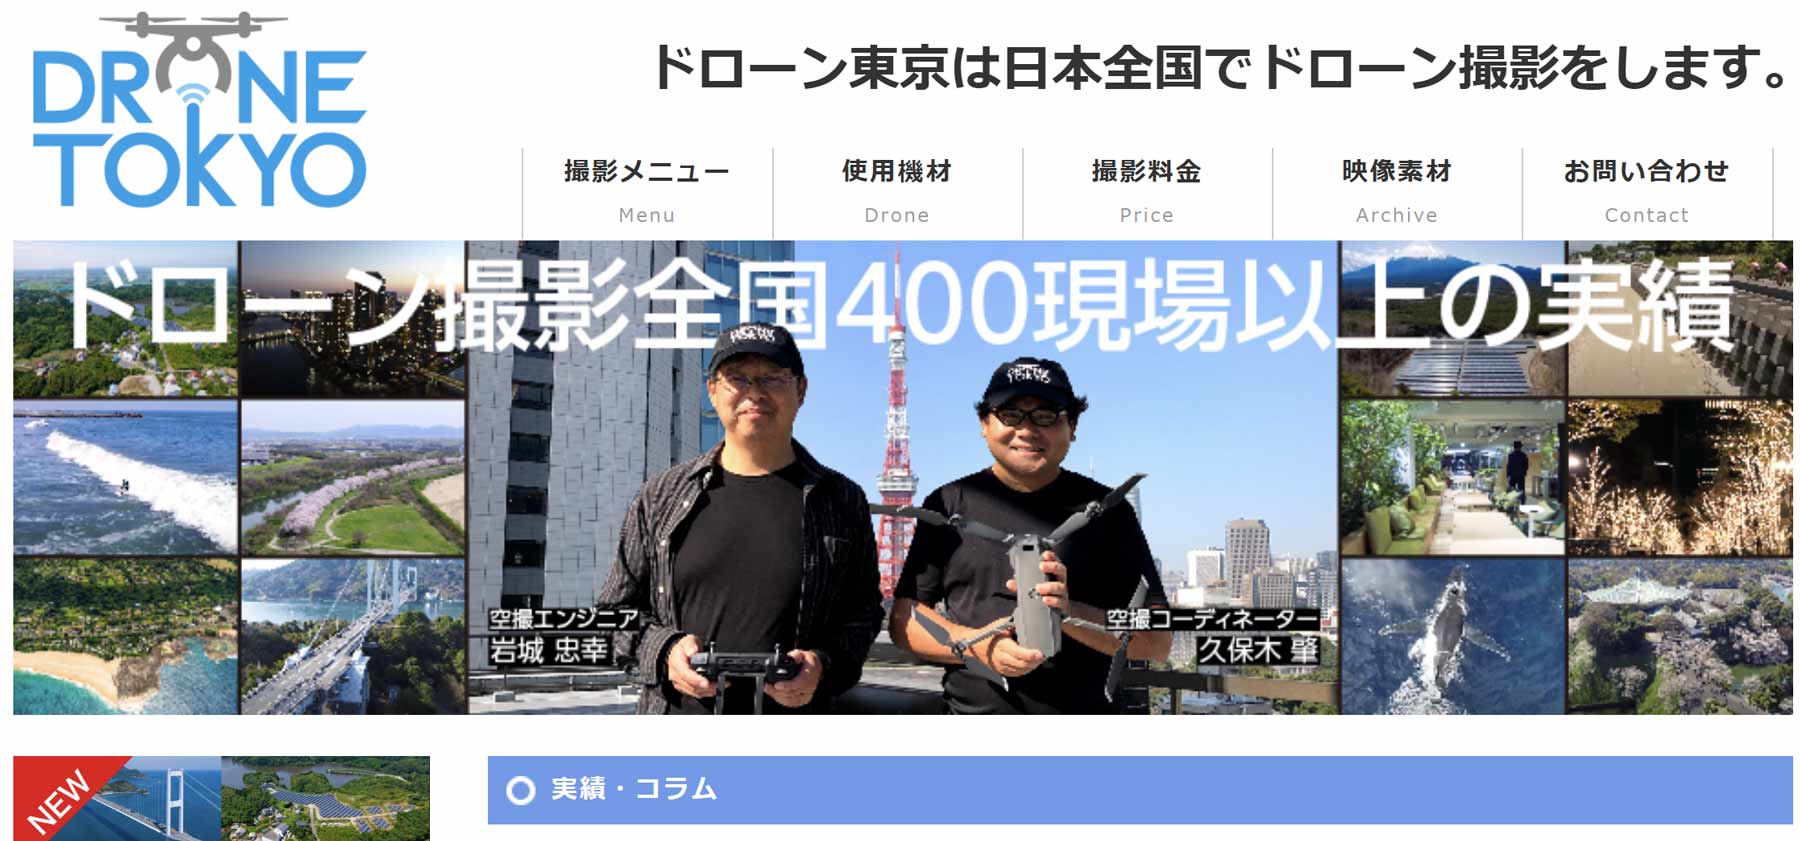 DRONE TOKYO公式Webサイト